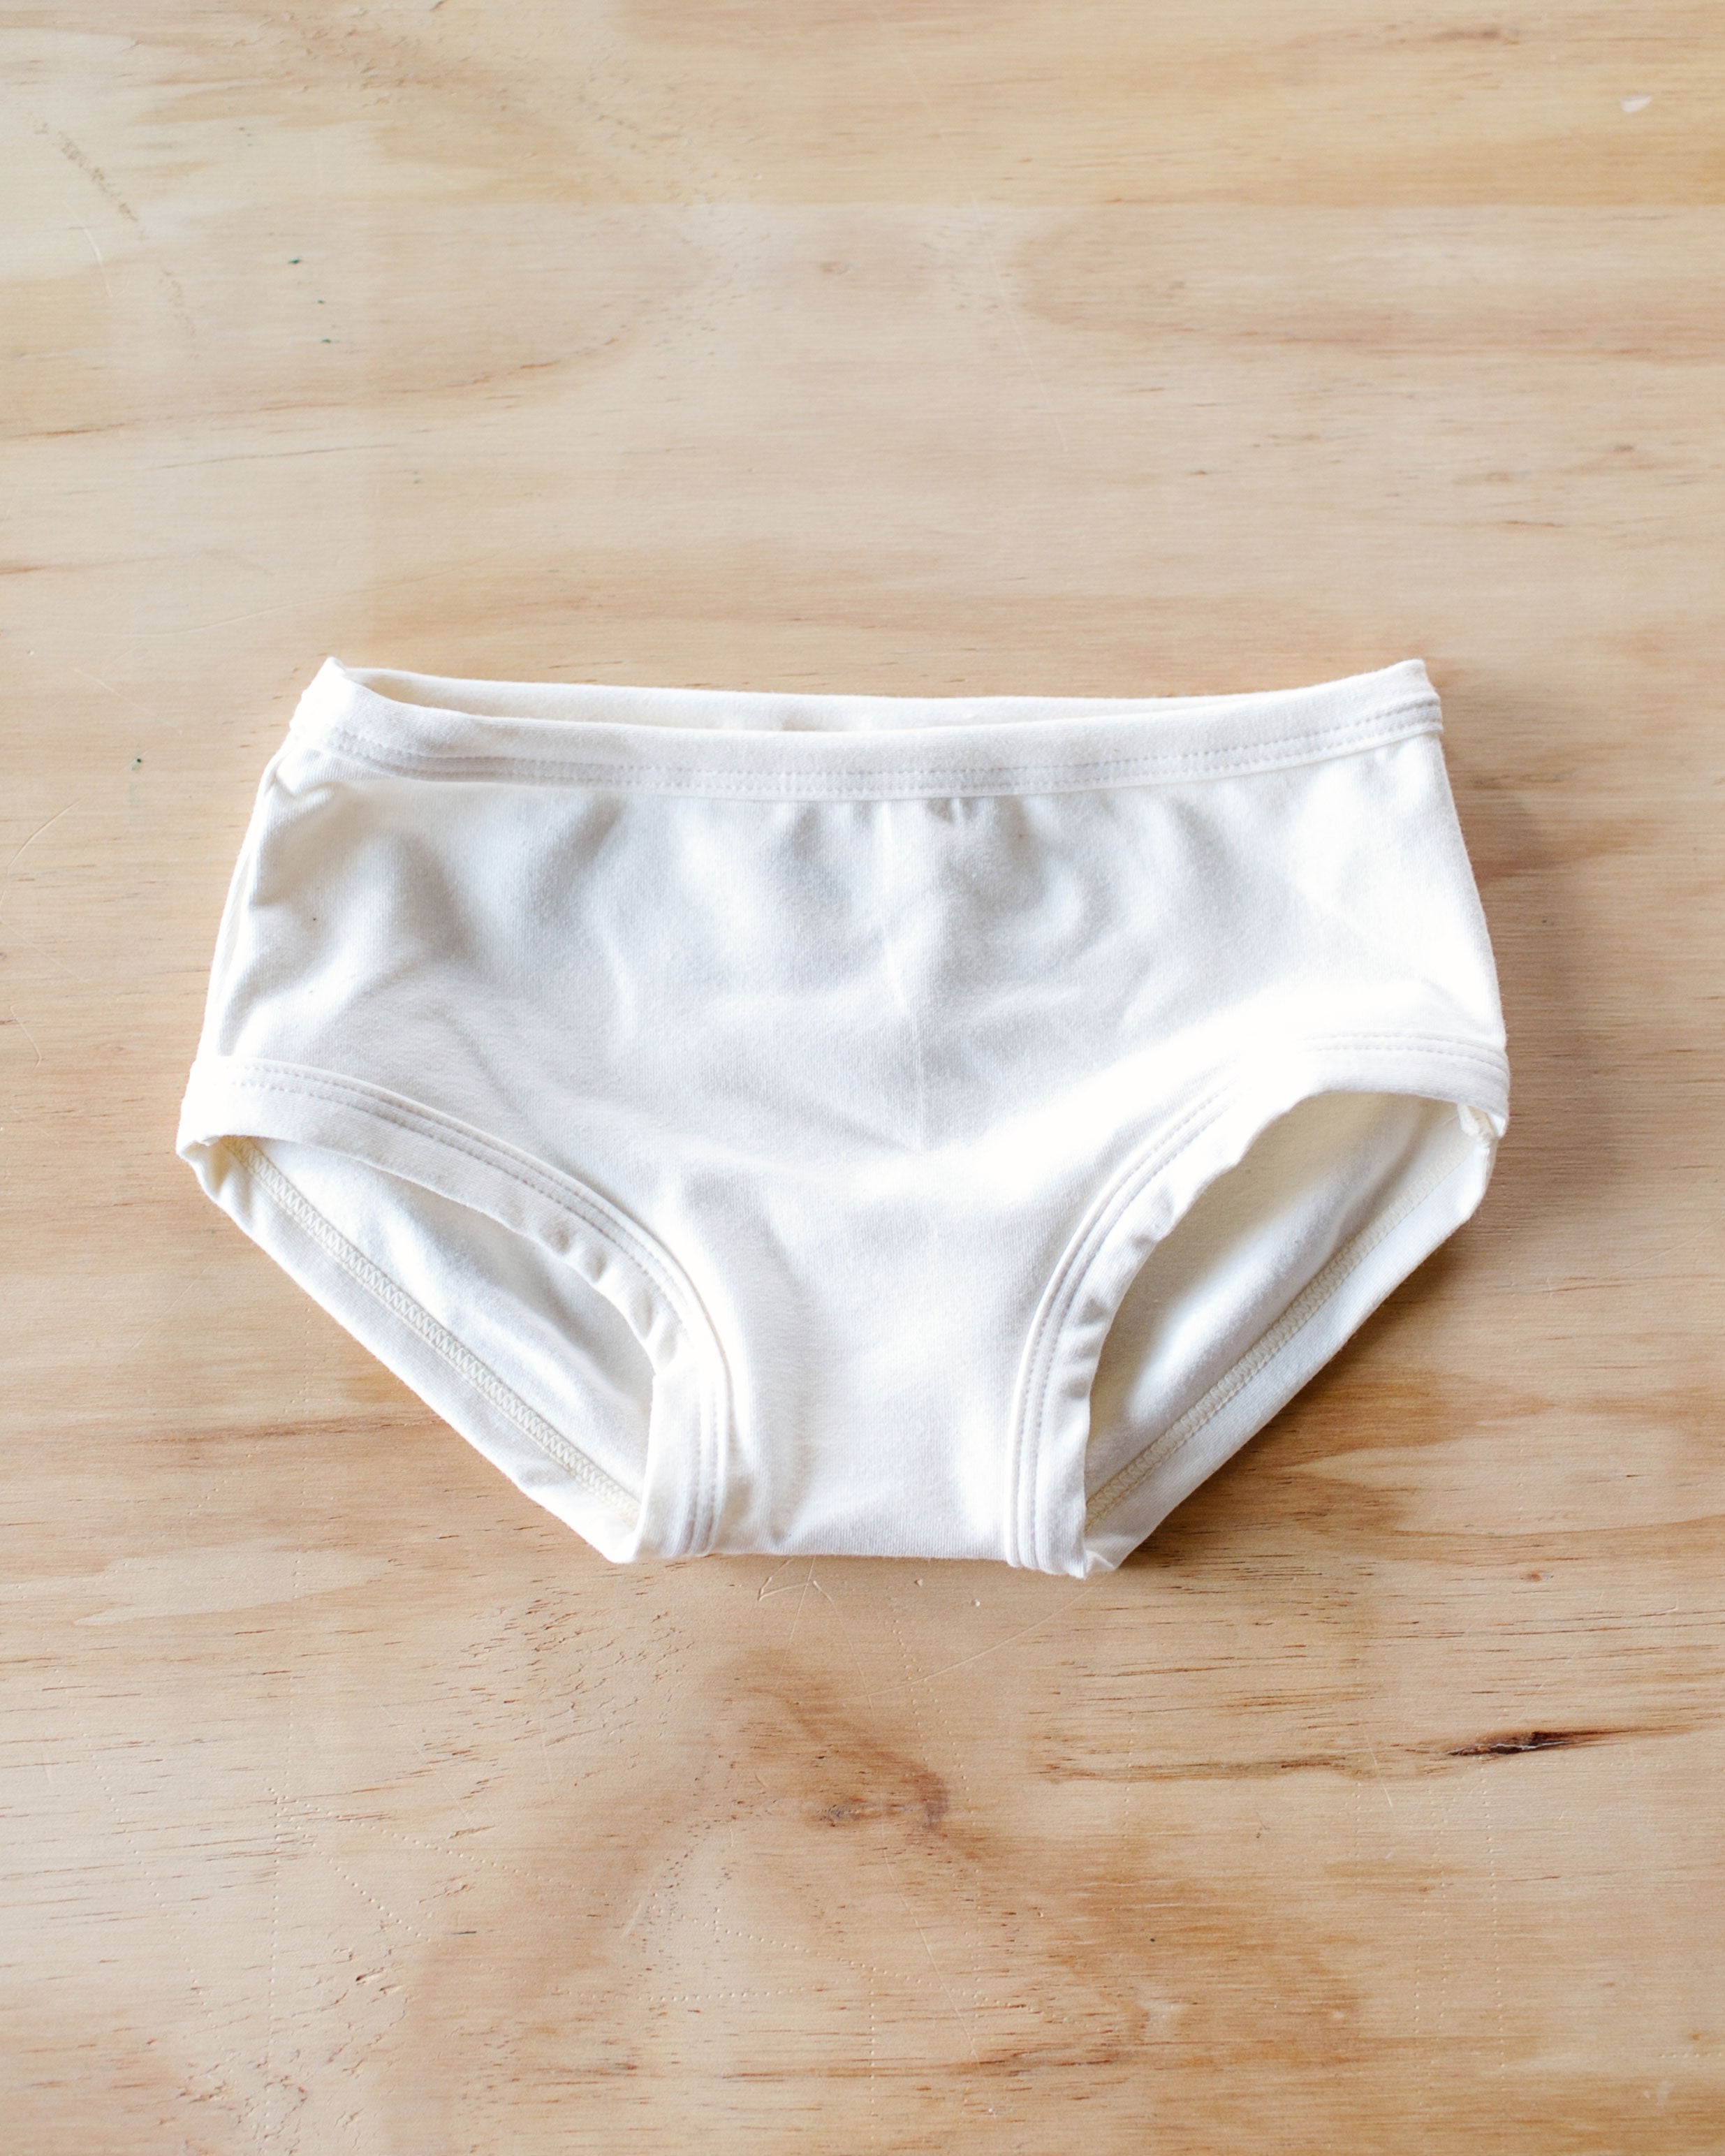 Flat lay of Thunderpants Kids style underwear in plain off-white Vanilla.